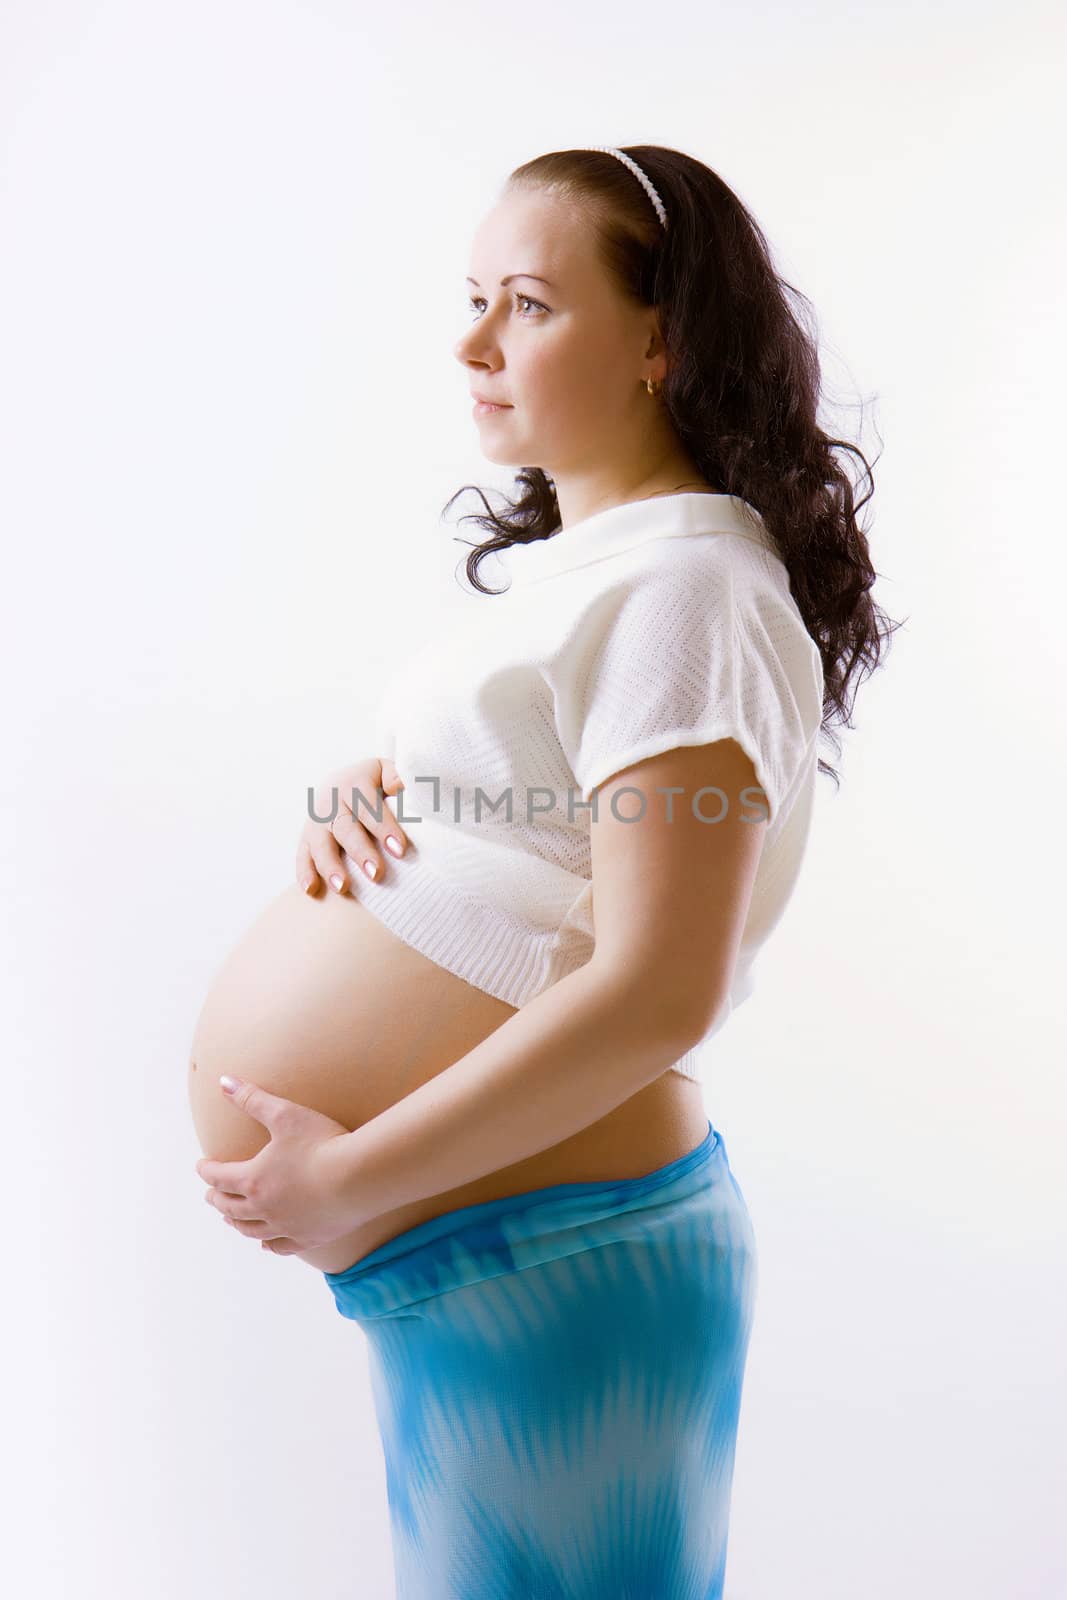 Pregnant young woman by pzRomashka